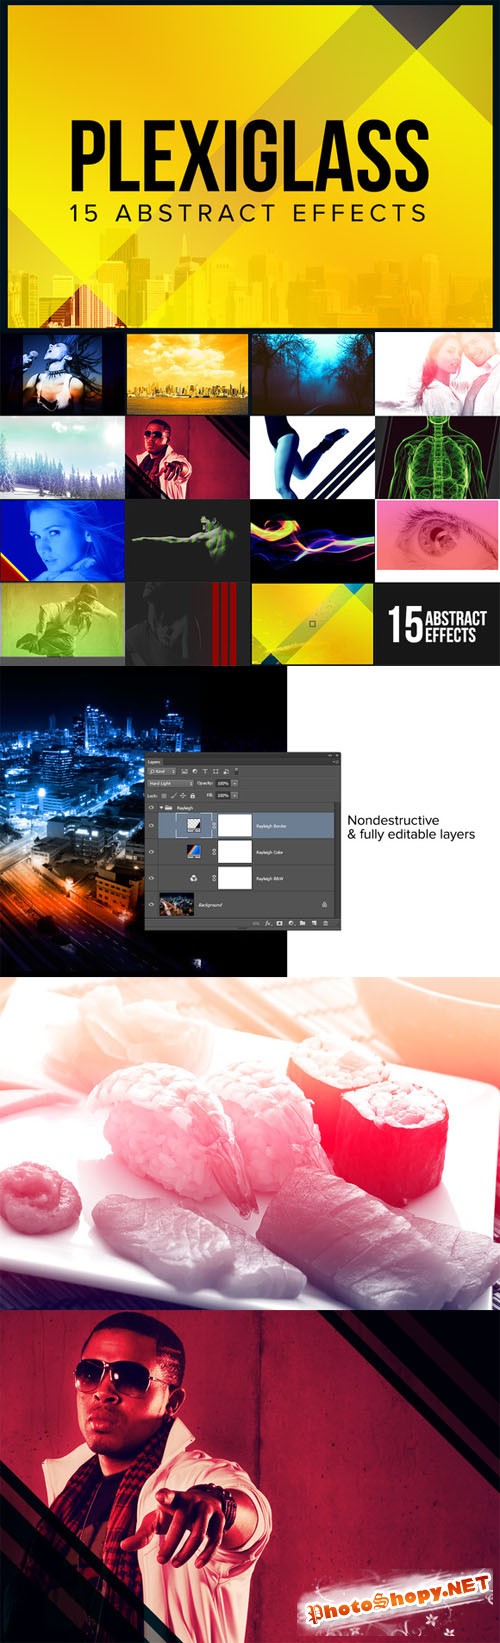 CreativeMarket - Plexiglass - 15 Abstract Effects